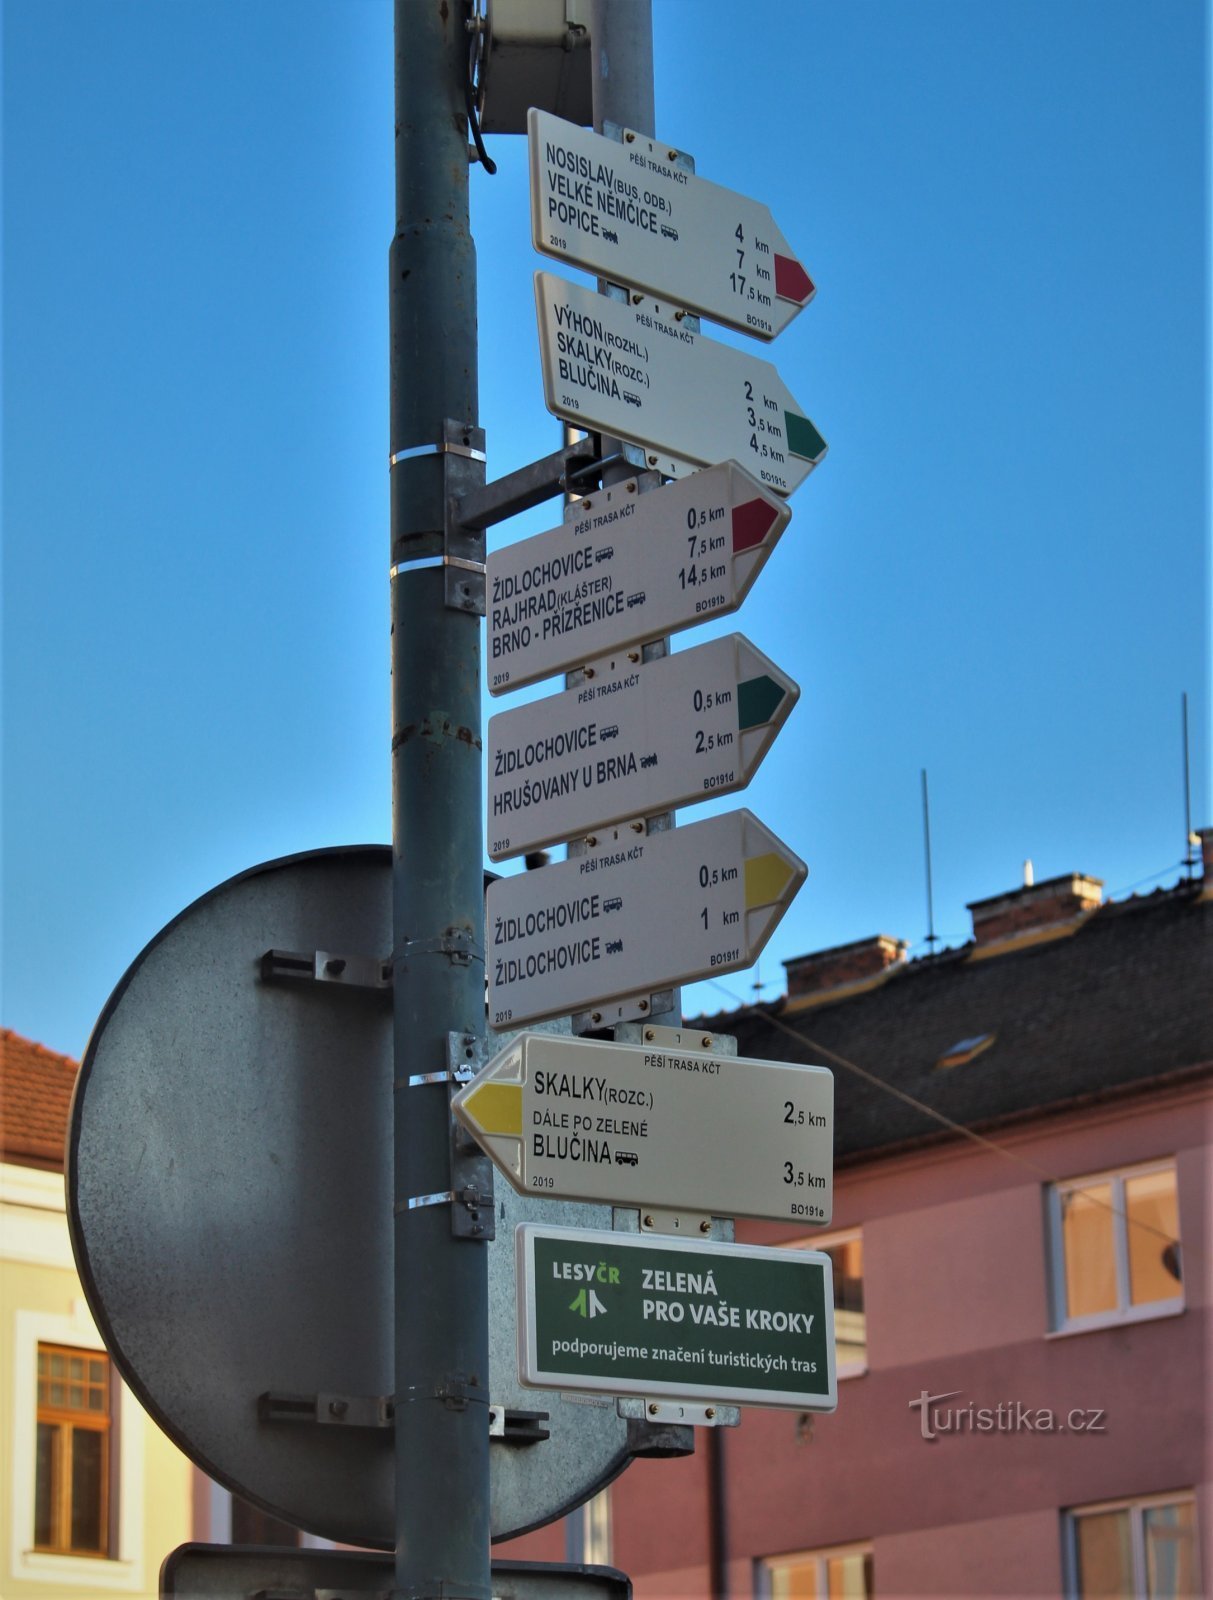 Tourist crossroads Židlochovice-town hall